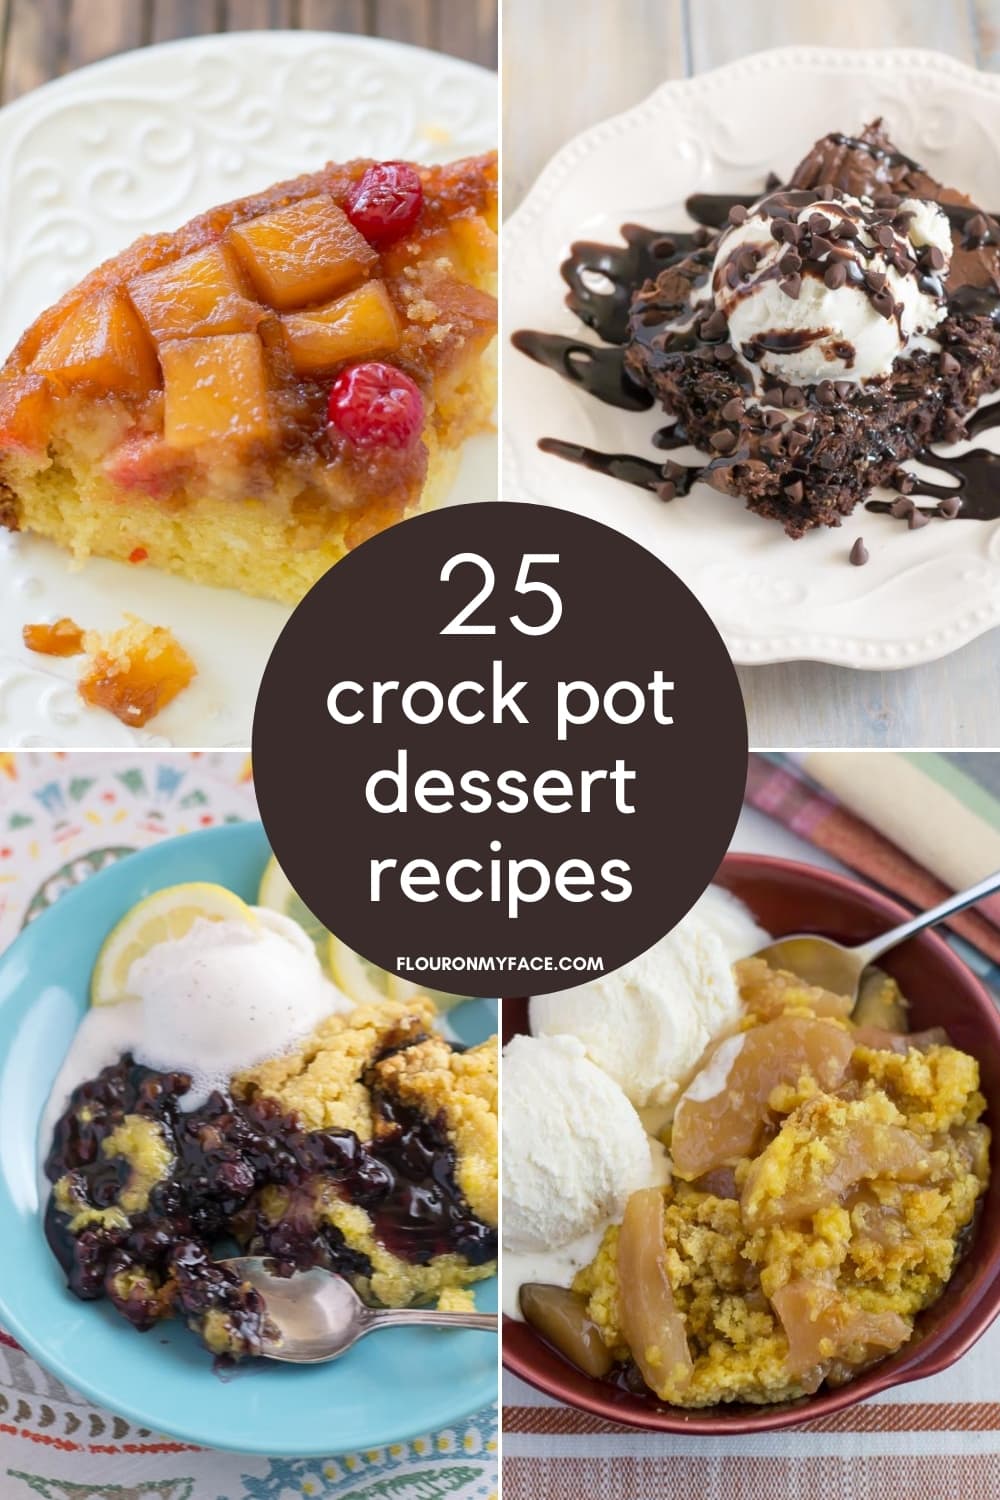 Crock Pot Dessert Recipes collage image